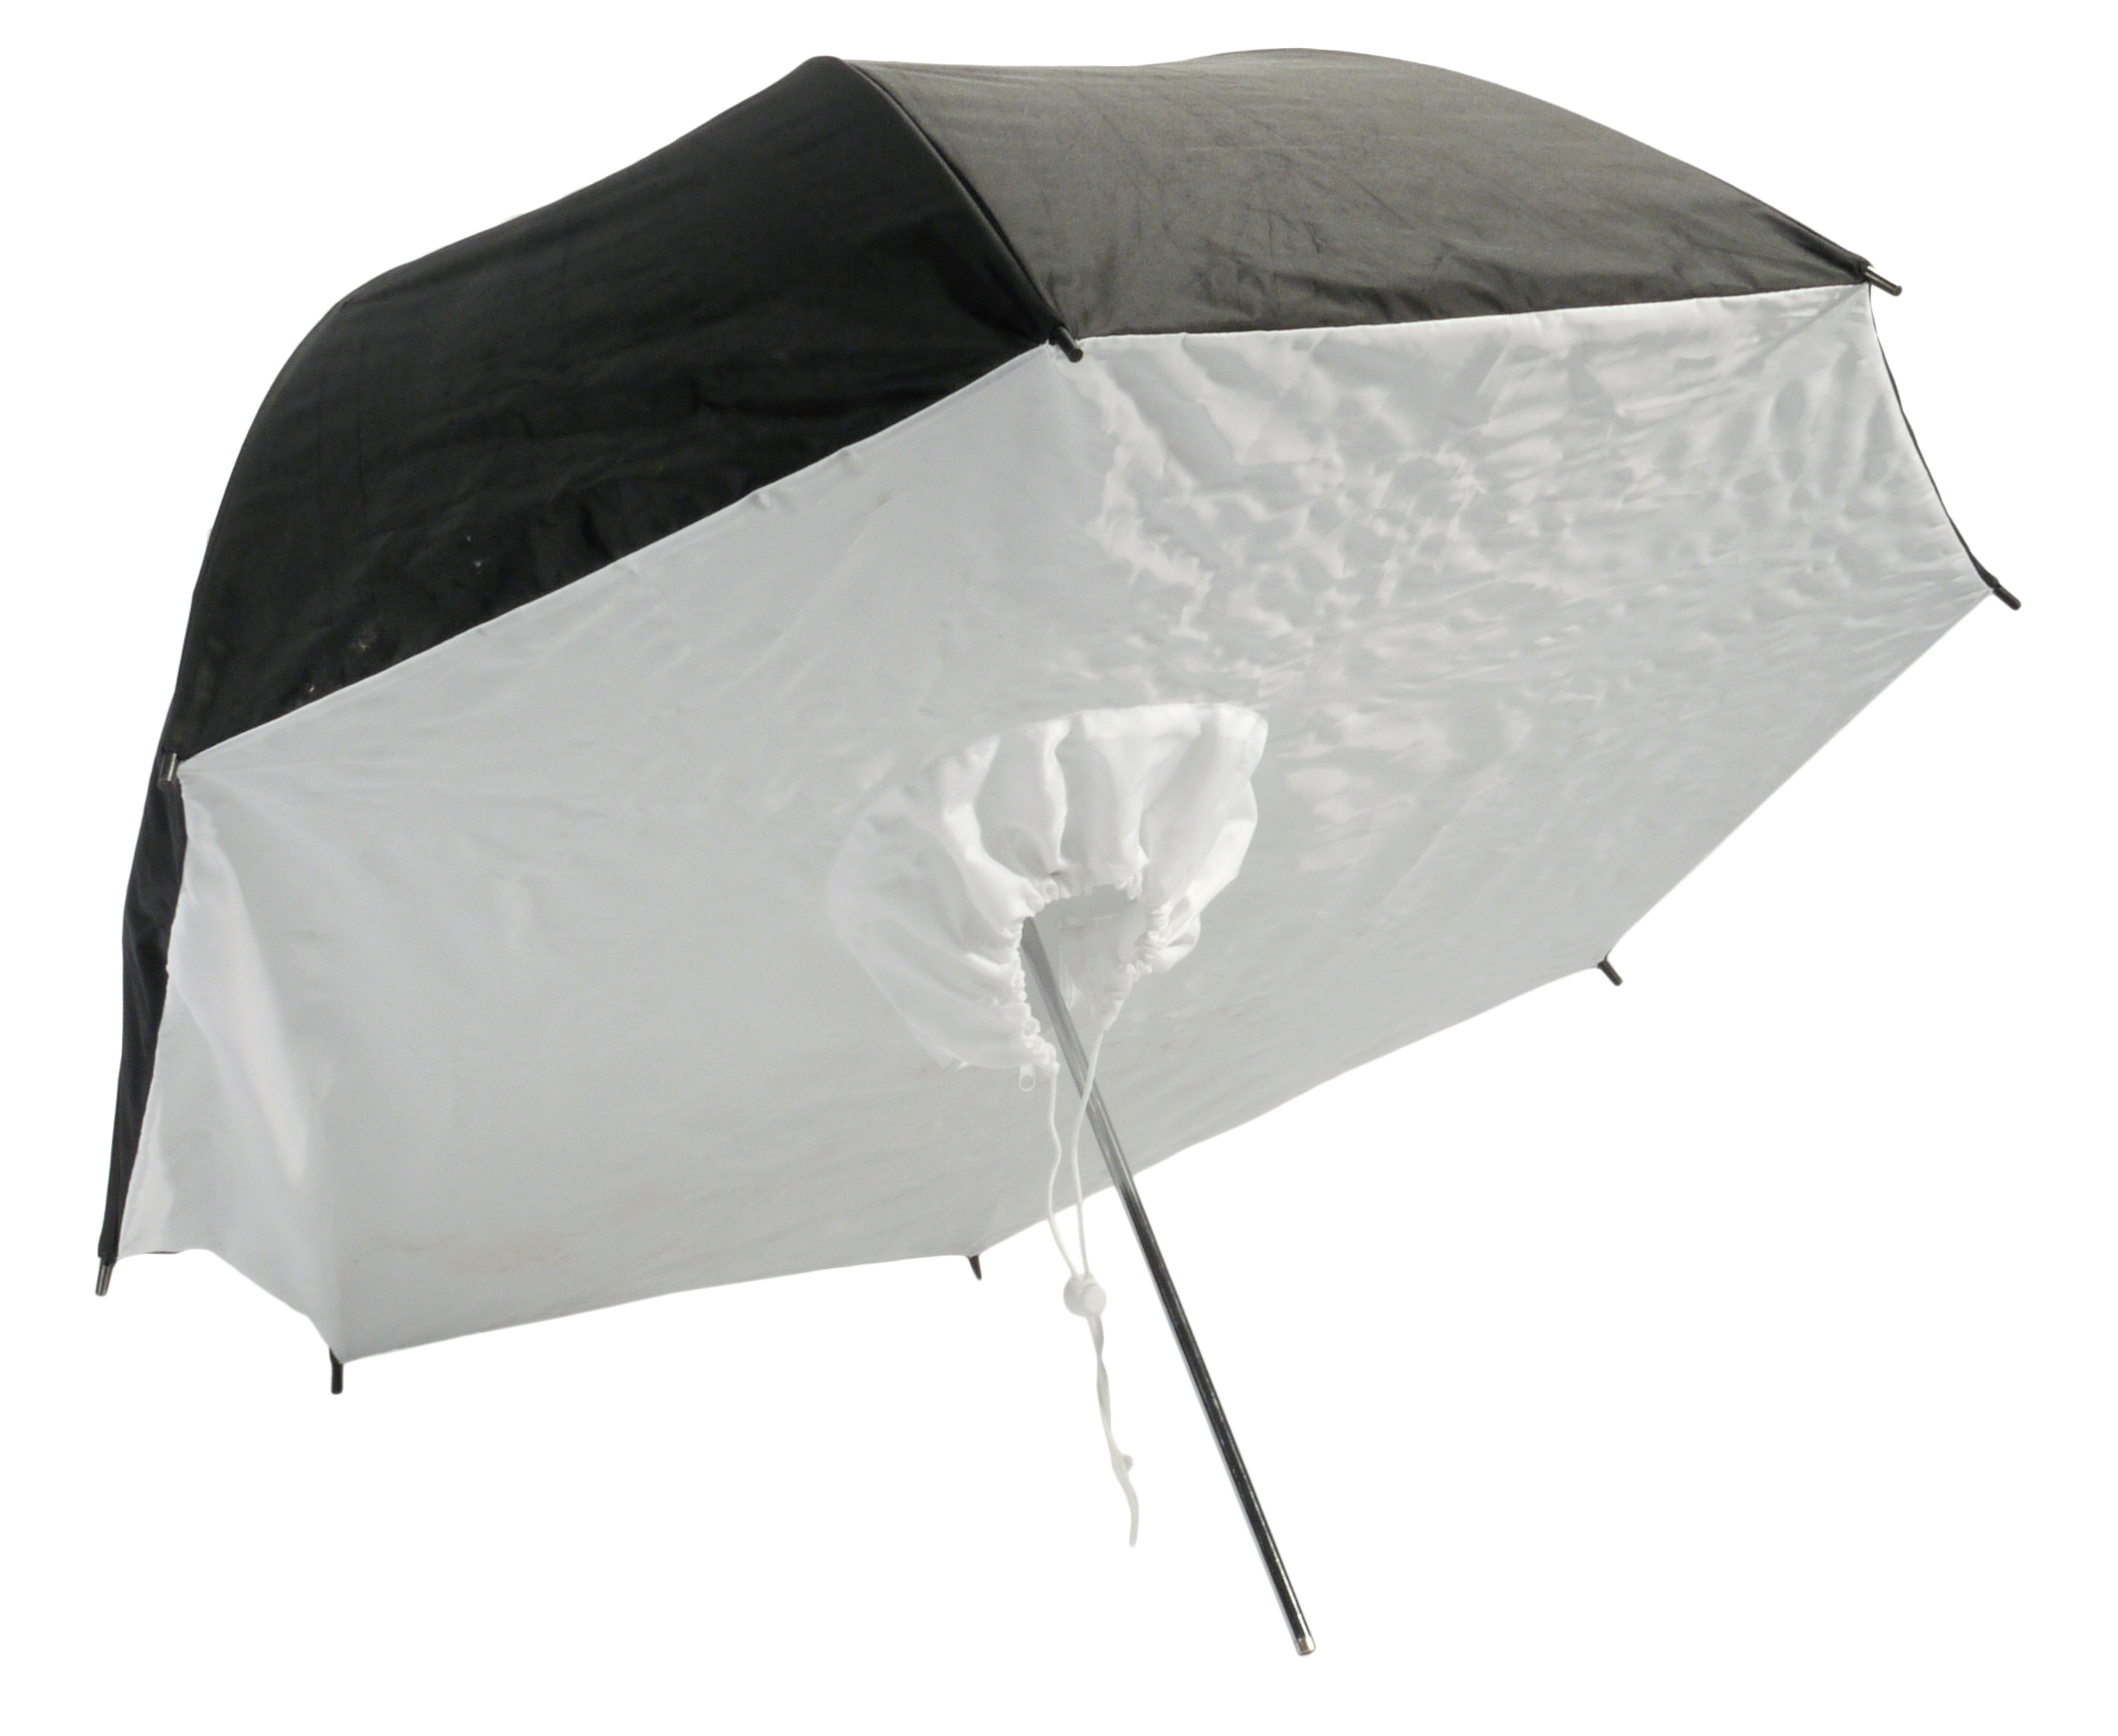 Promaster 9174 Professional 40" Pop UP Soft Box Reflective Umbrella